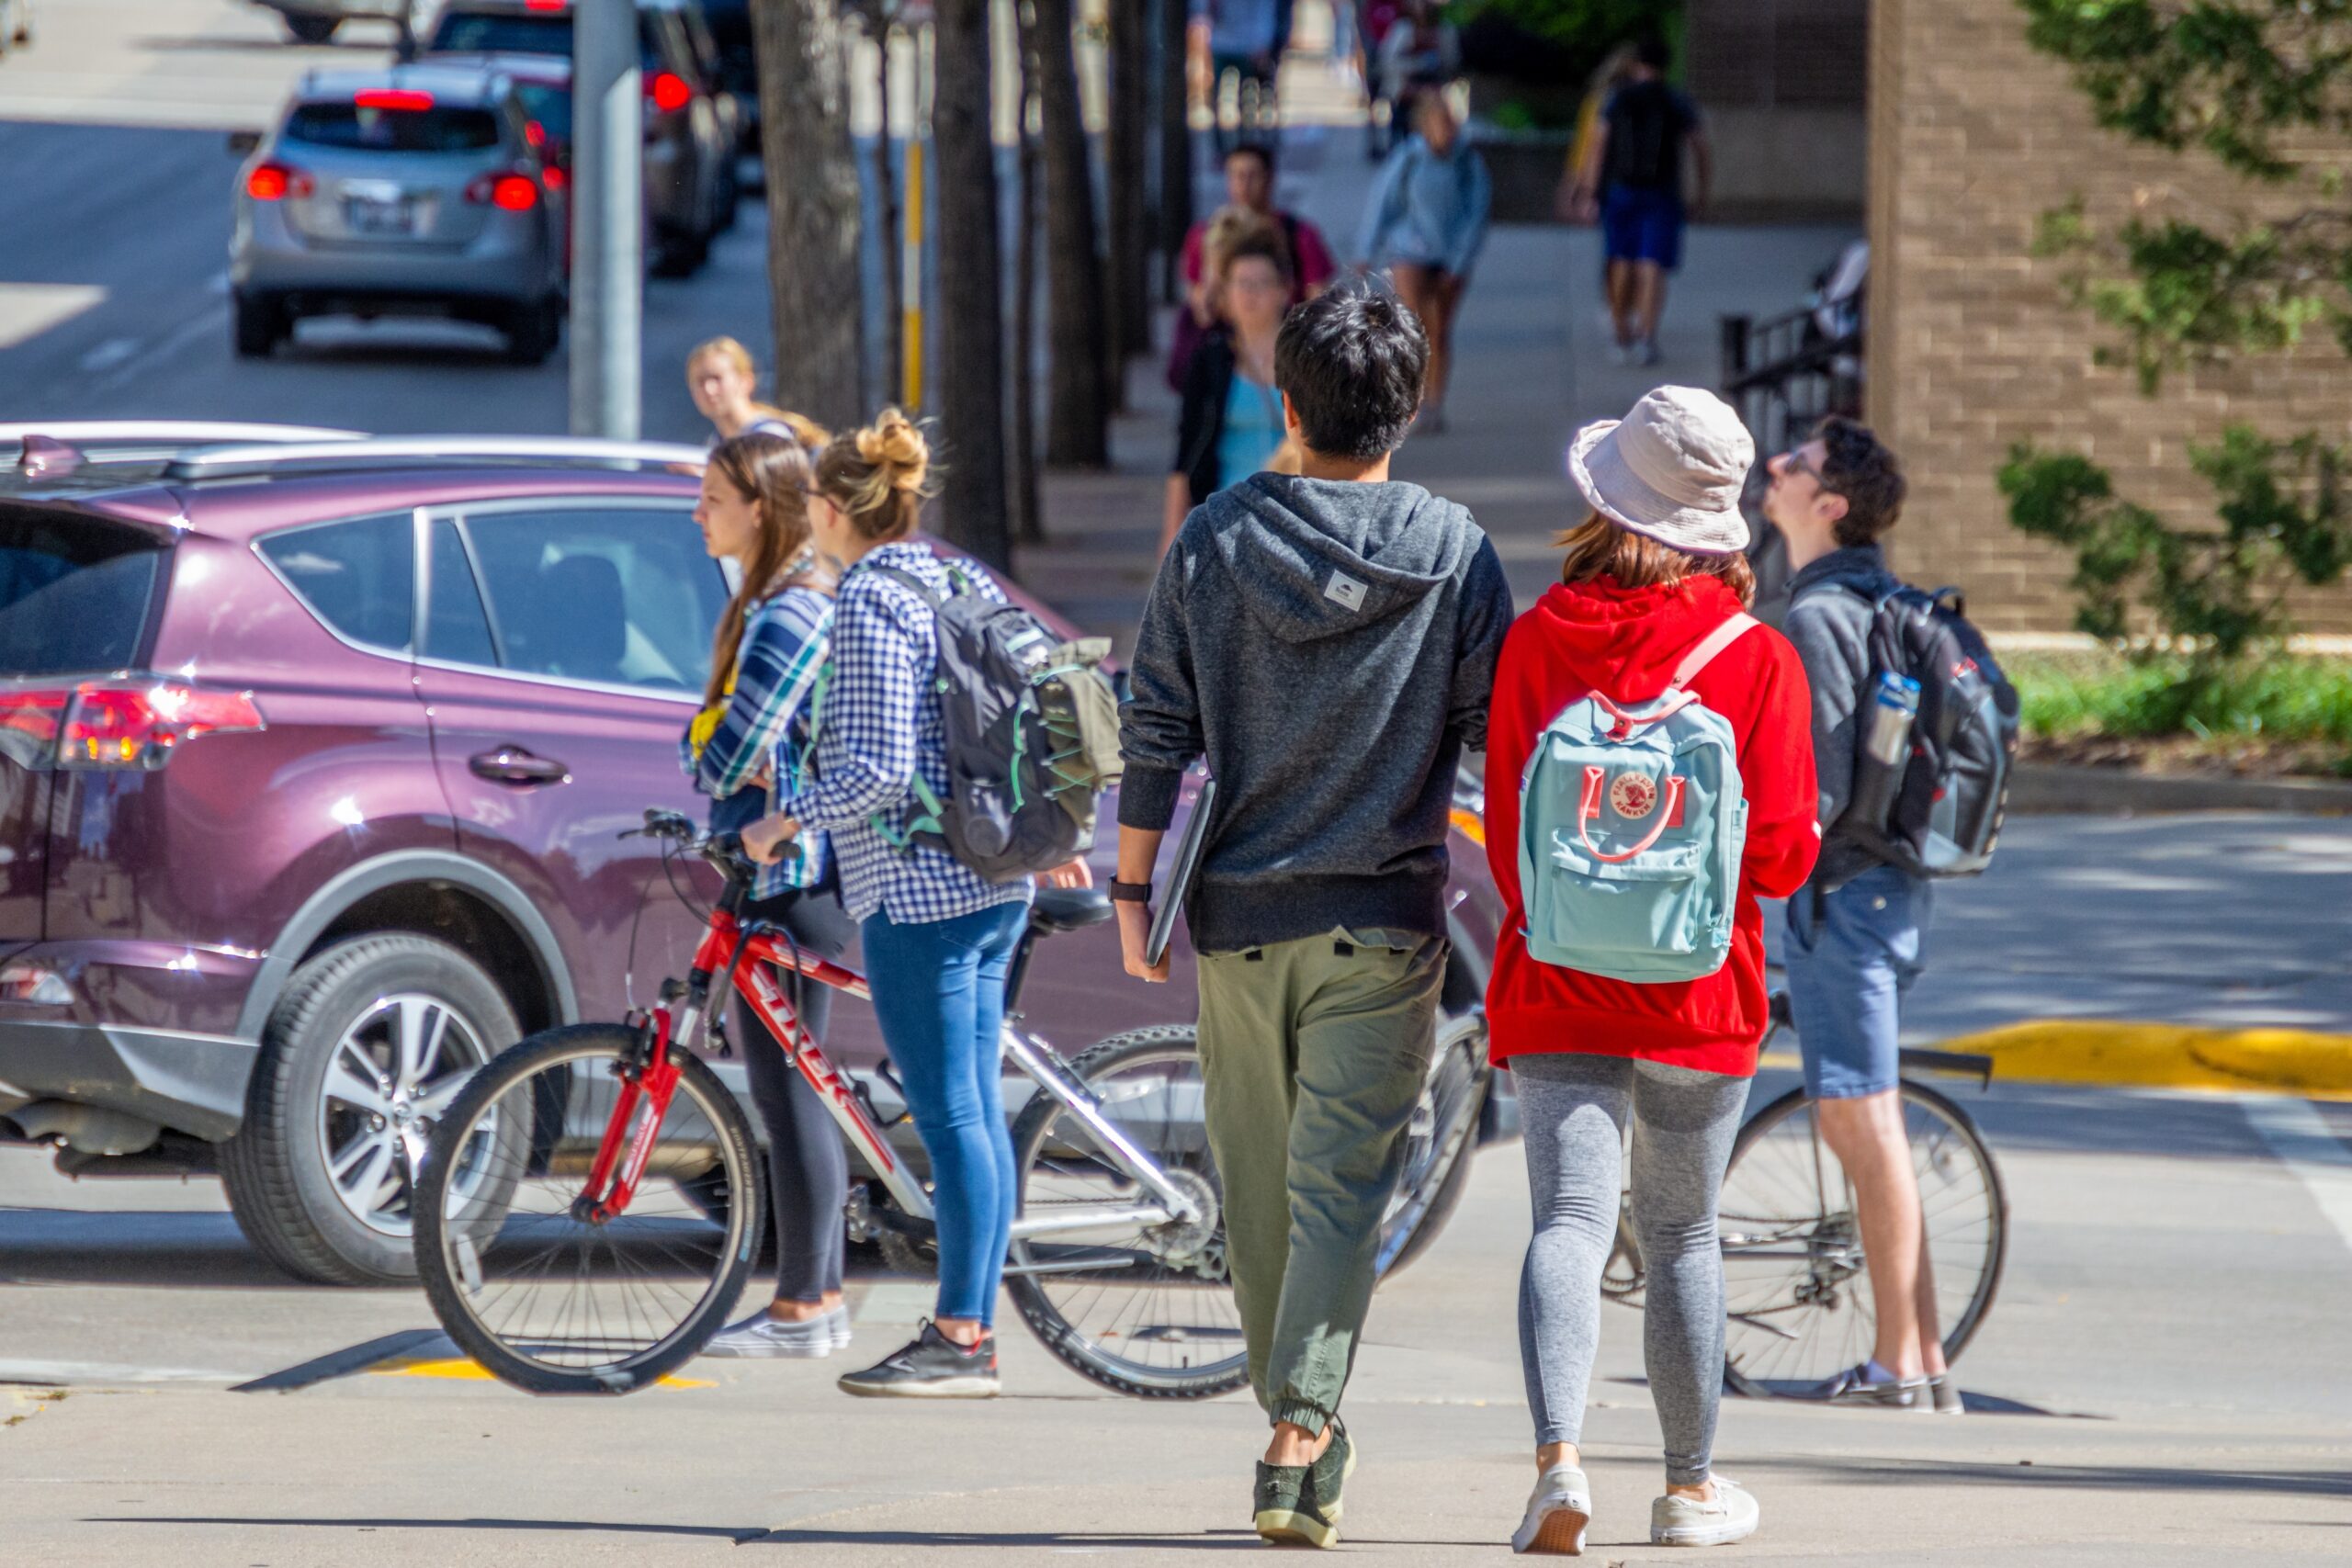 Students walking along Johnson St. on the University of Wisconsin-Madison campus.